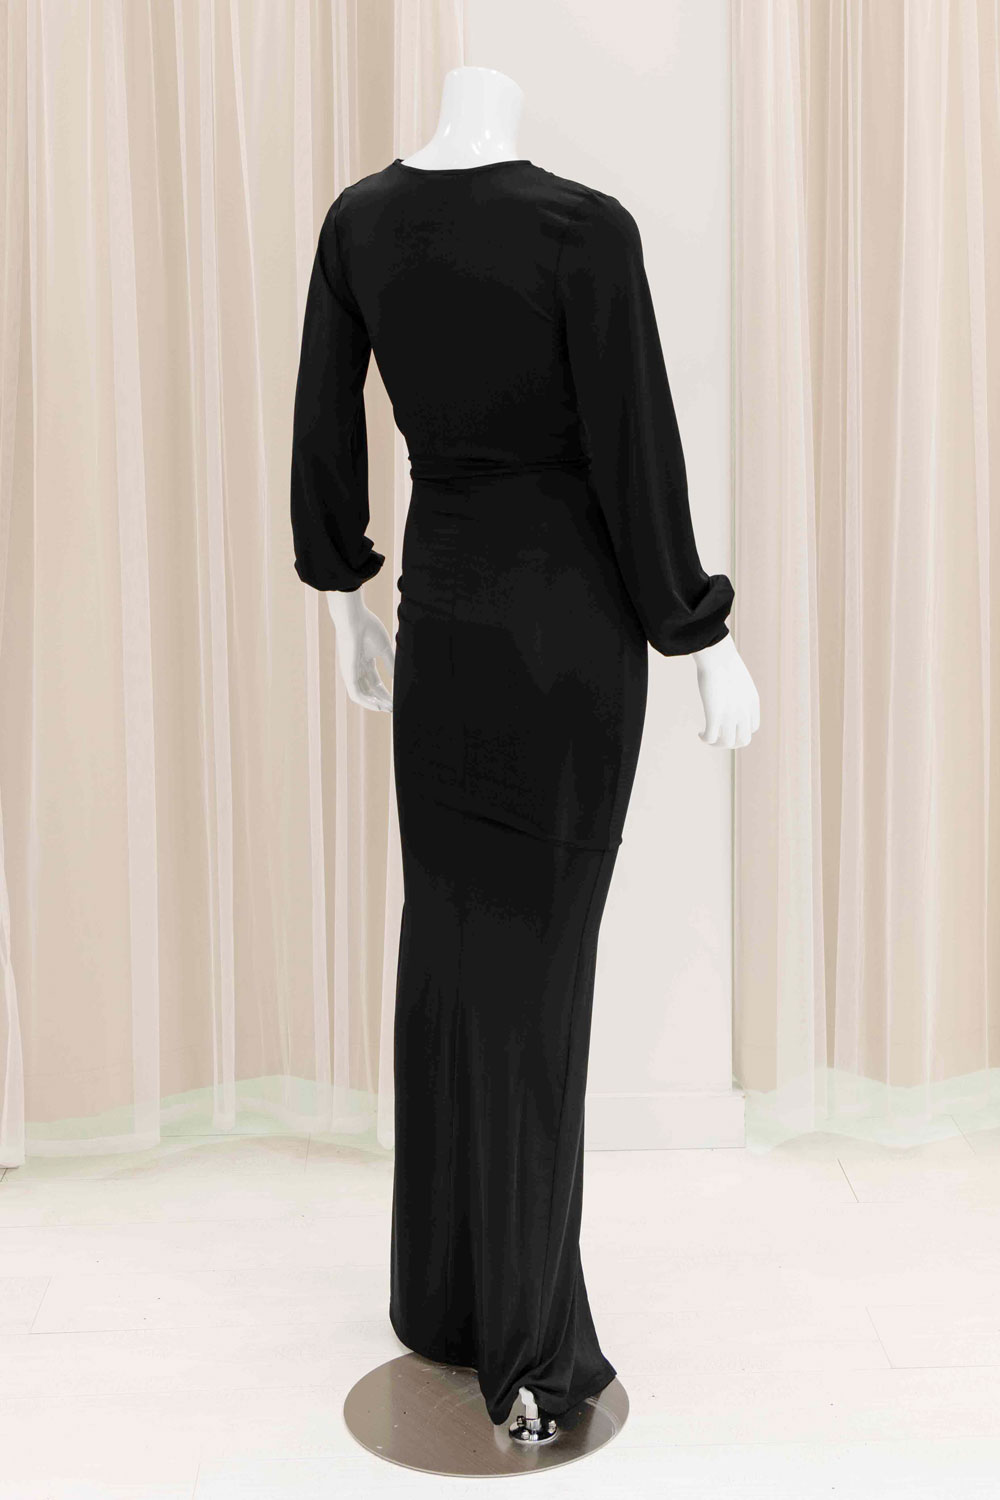 Elmira Long Sleeve Evening Gown in Black